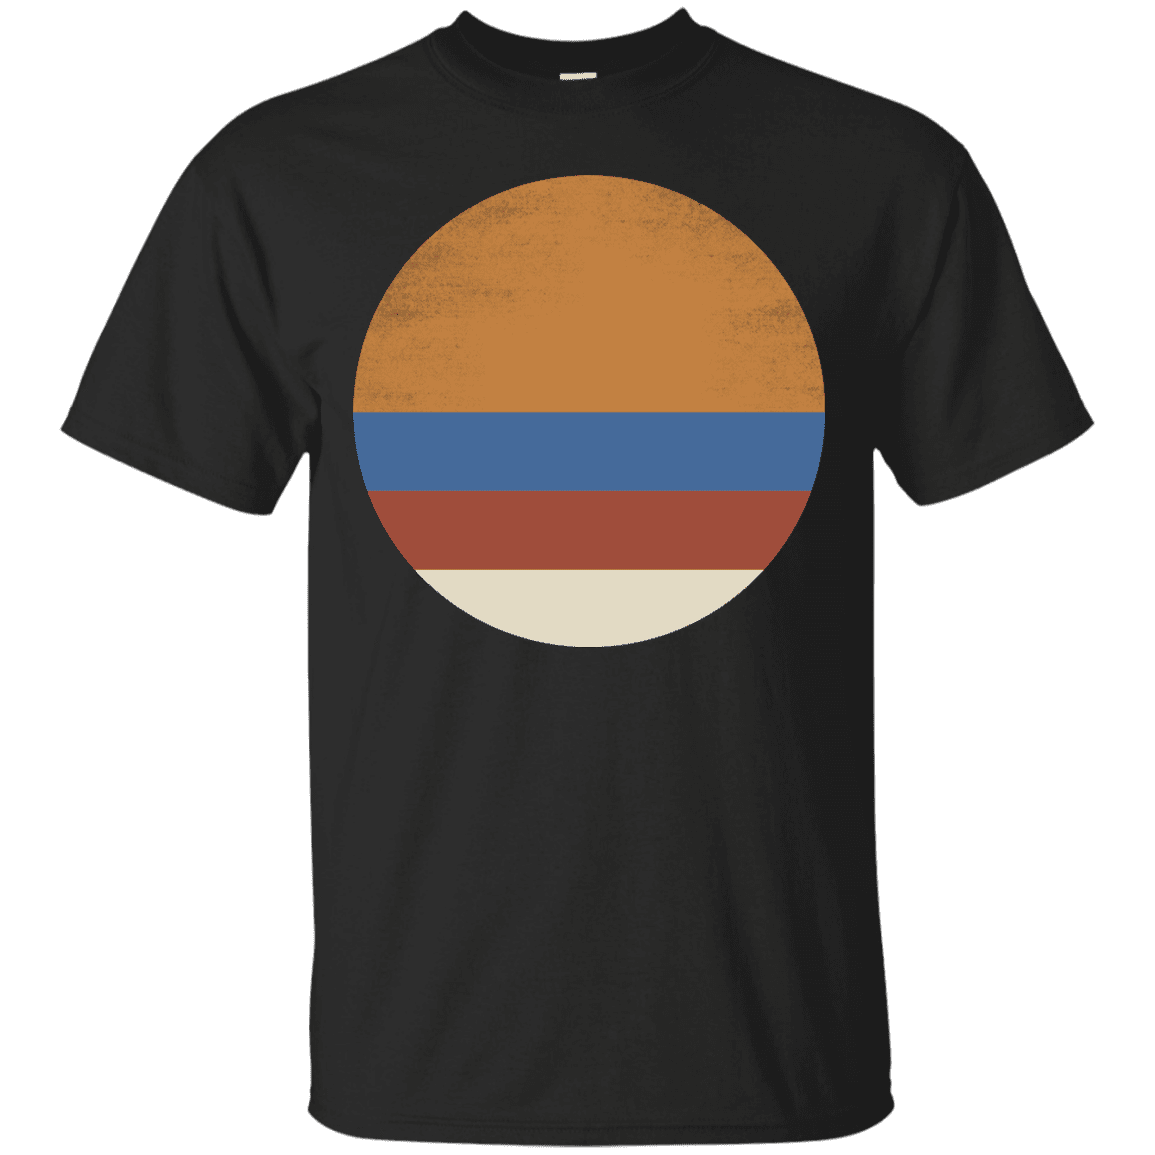 T-Shirts Black / S 70s Sun T-Shirt